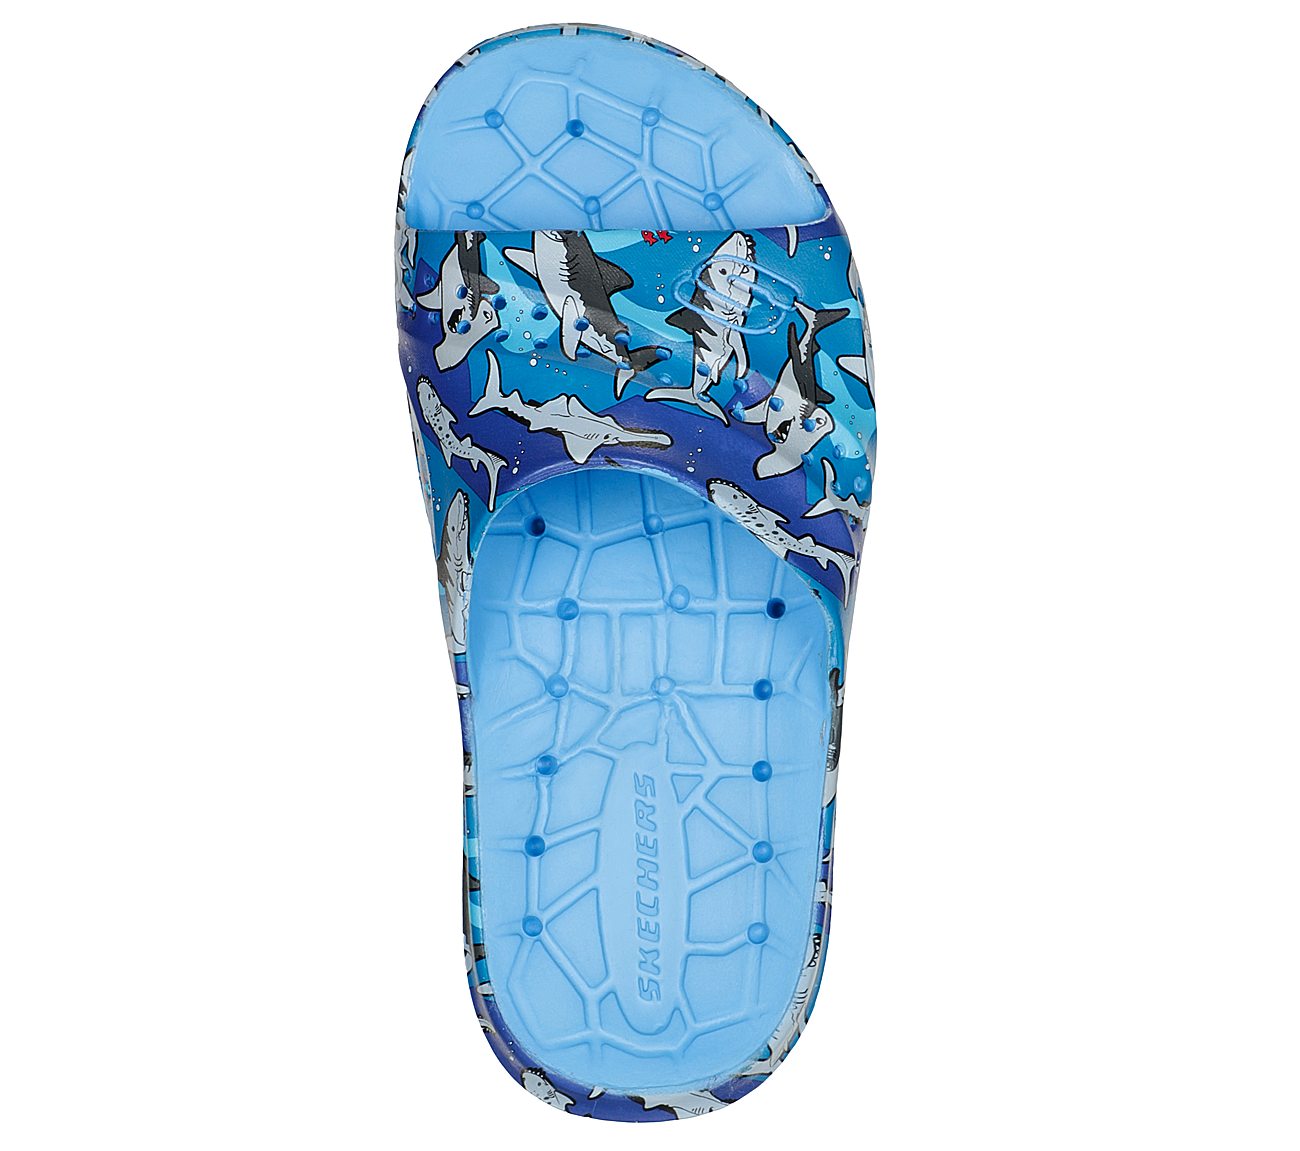 HOGAN - DANGEROUS WATERS, BLUE/LIGHT BLUE Footwear Top View